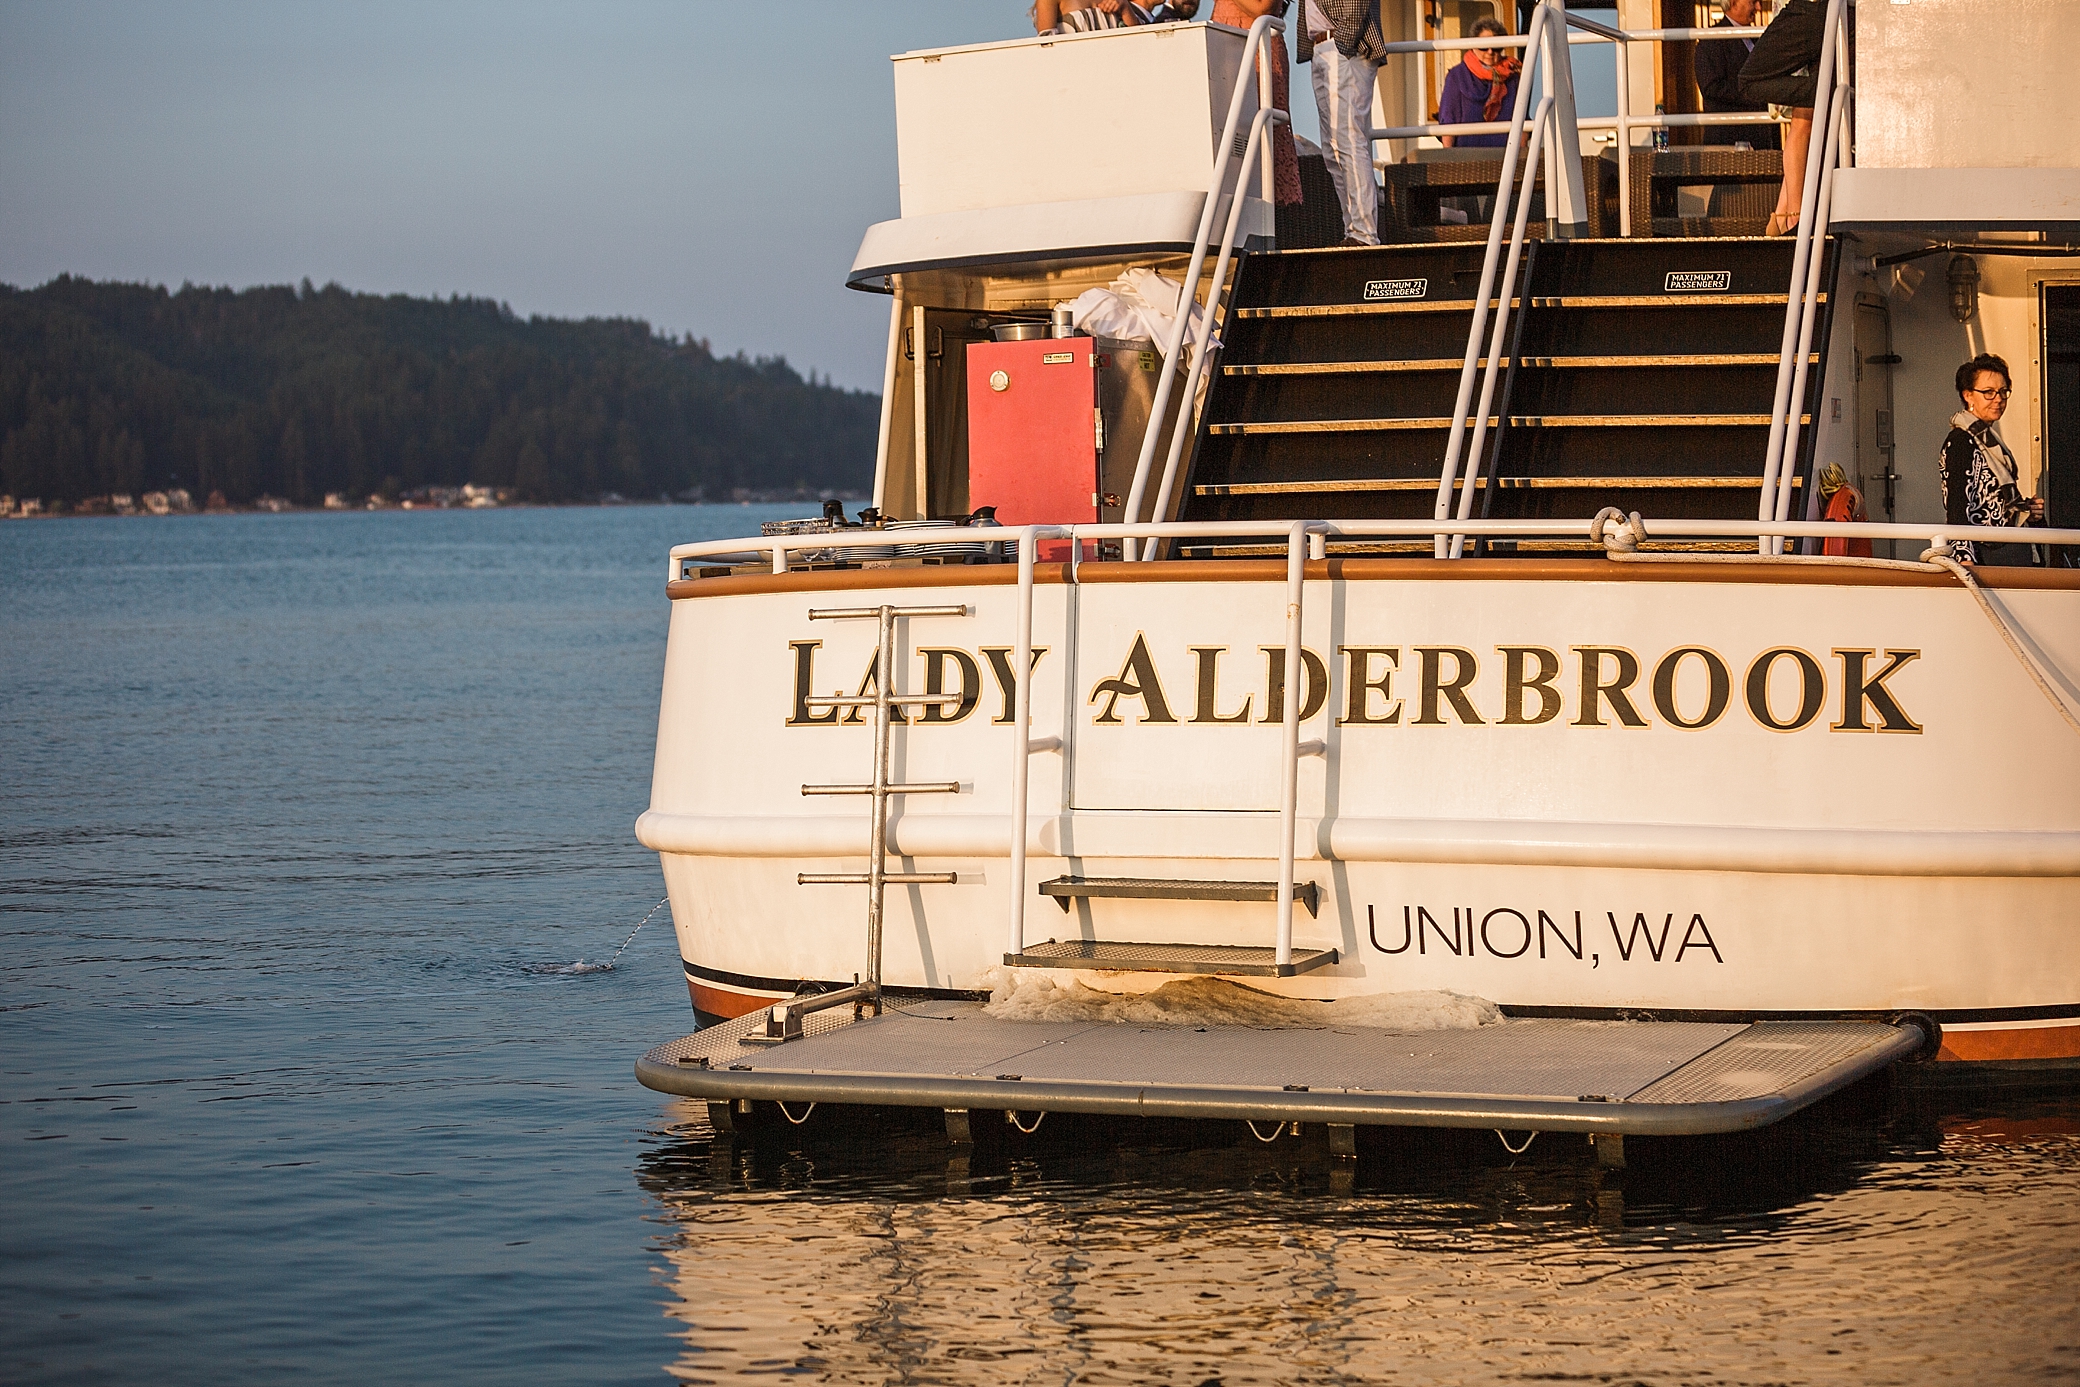 Lady Alderbrook Cruise on the Hood Canal | Megan Montalvo Photography